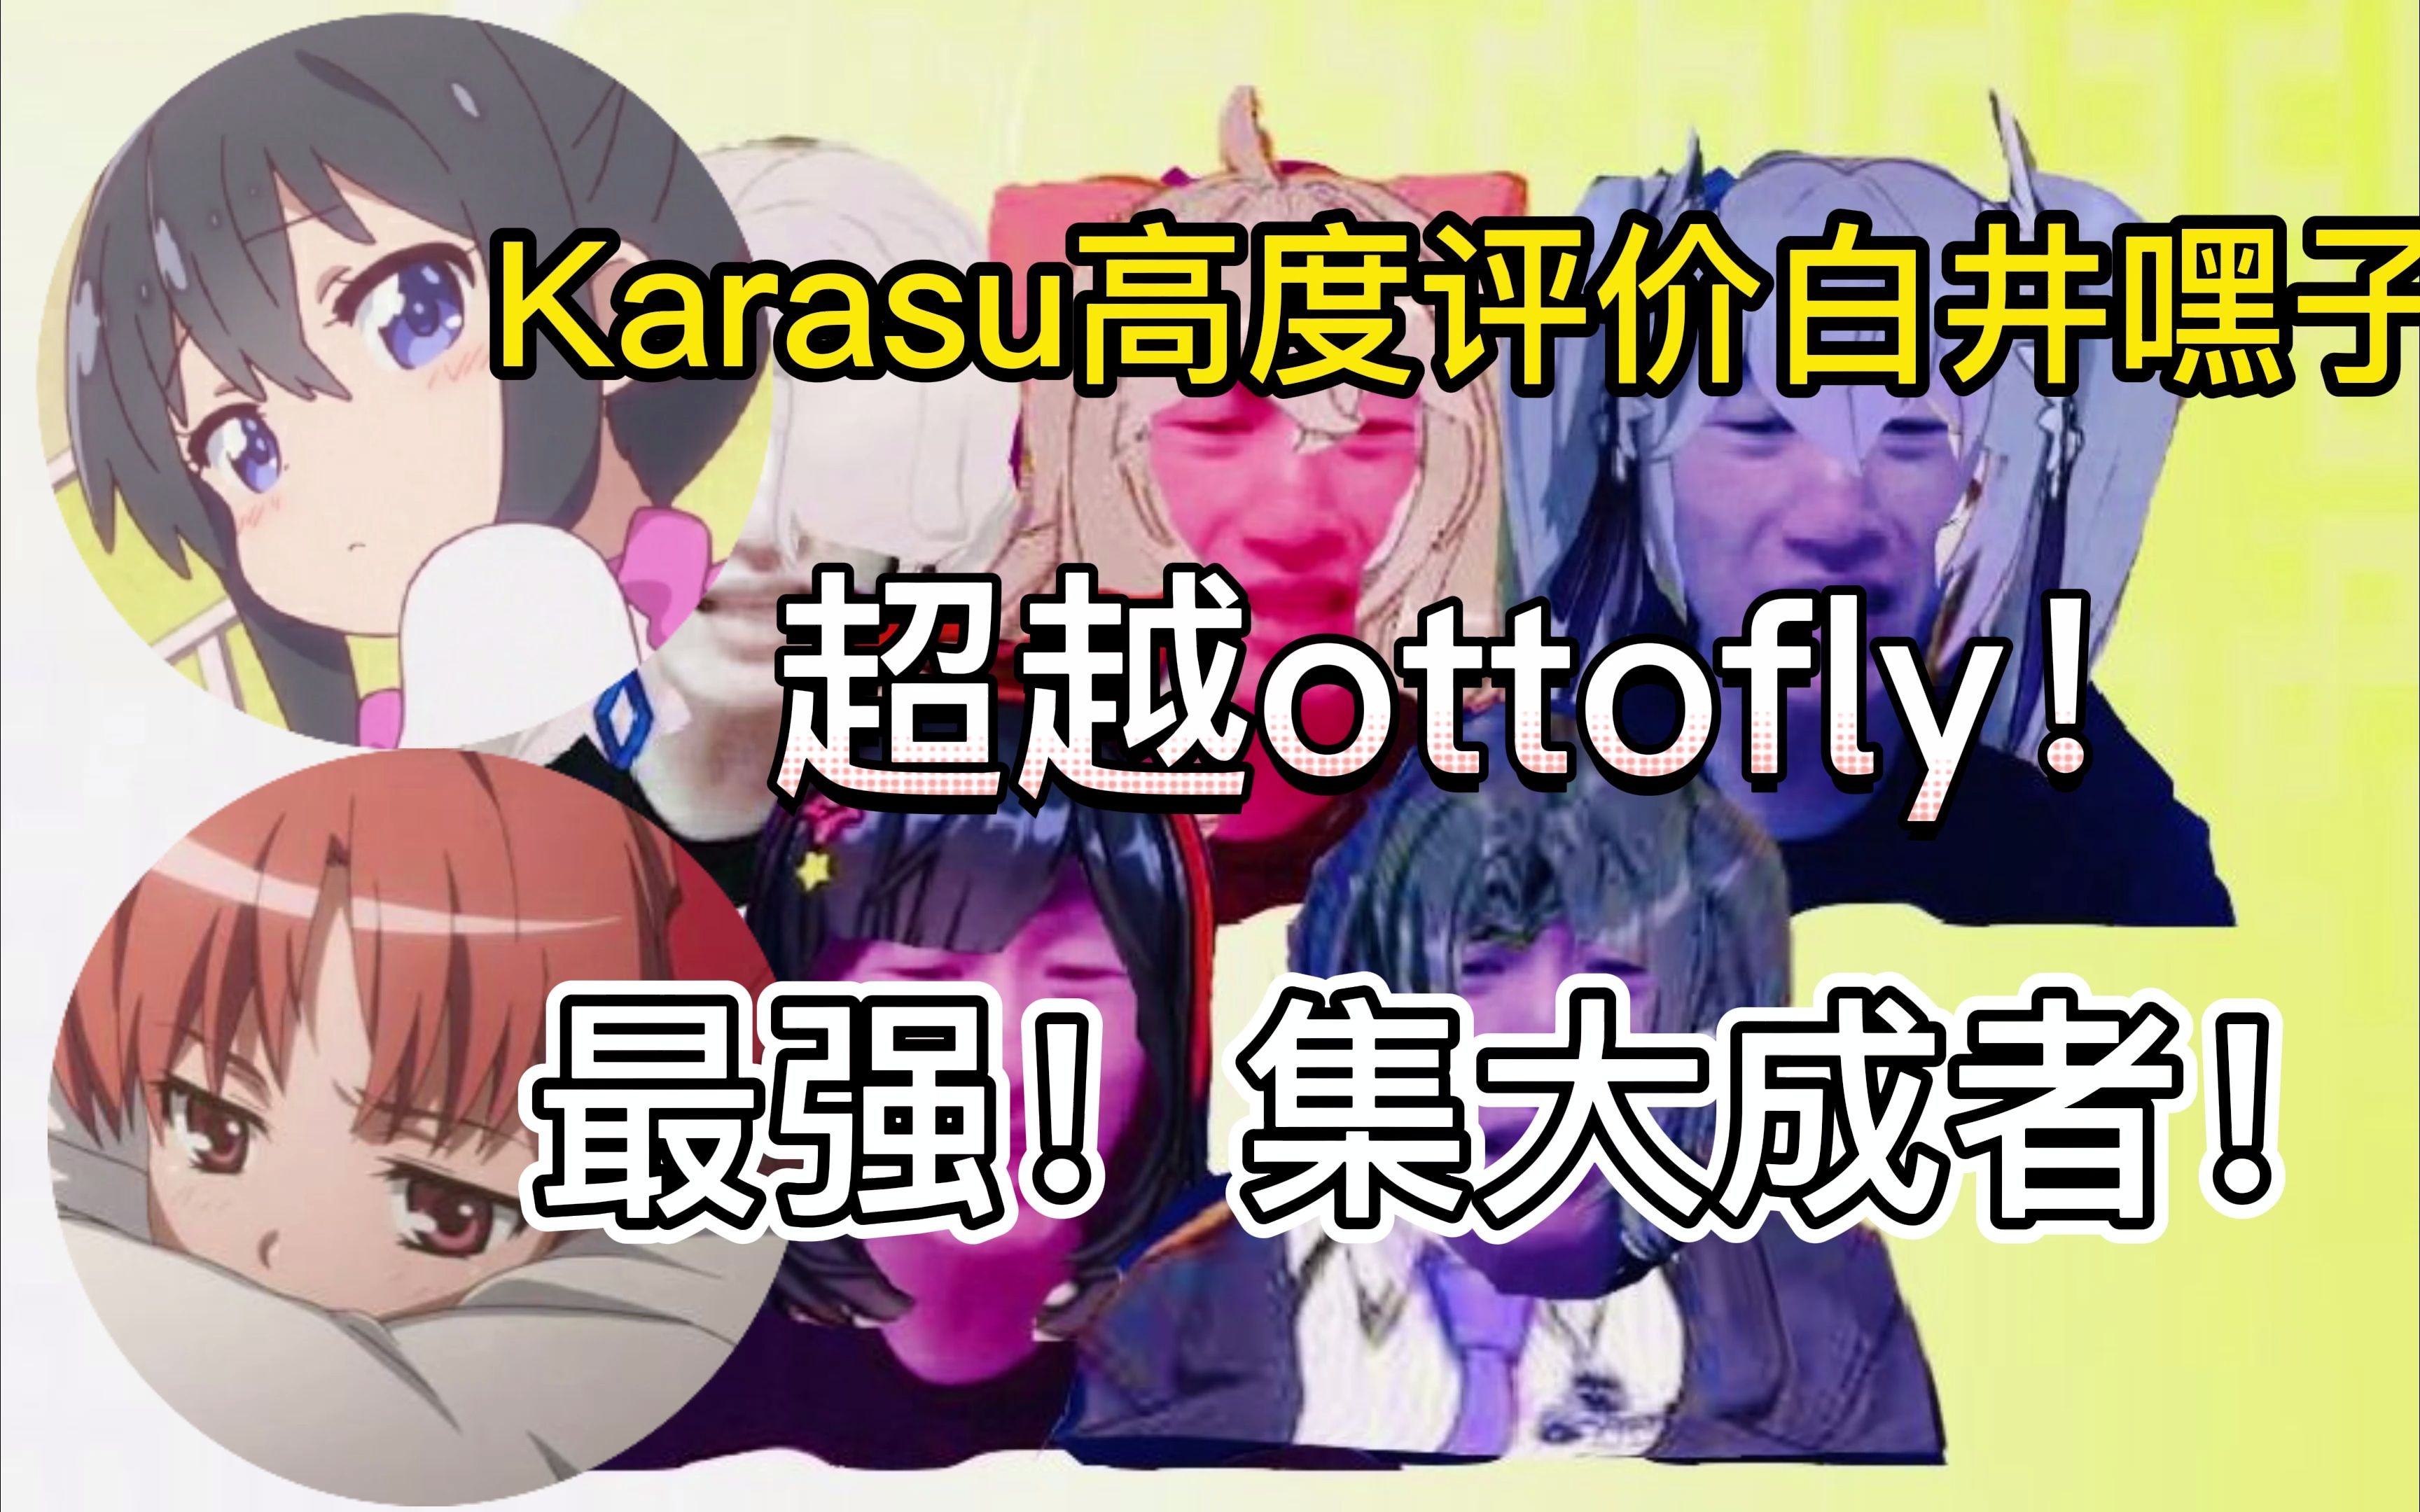 karasu高度评价白井嘿子 超级敏感：ottofly教派最强者！集大成者！超越ottofly的最强作品！